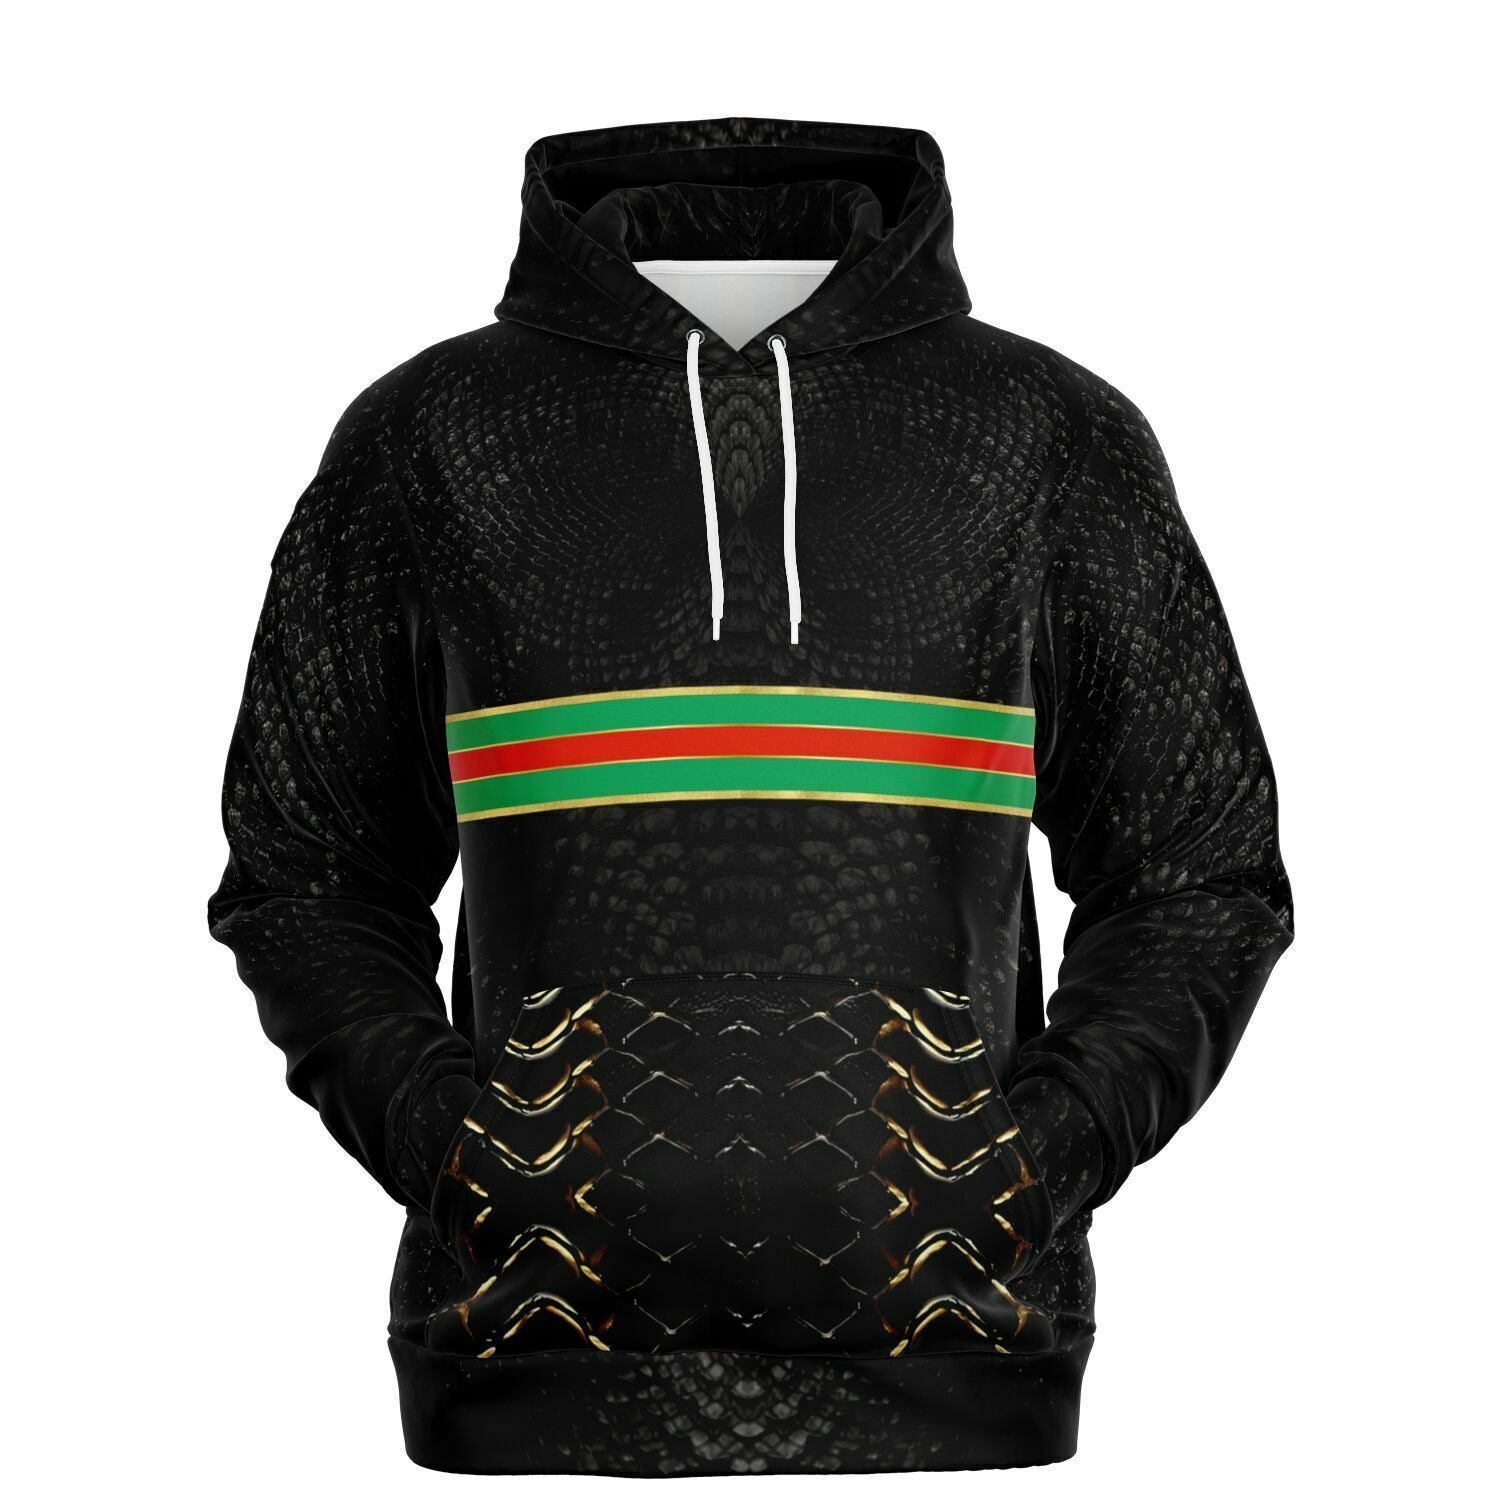 exclusive designer fashion hoodie by Elivior